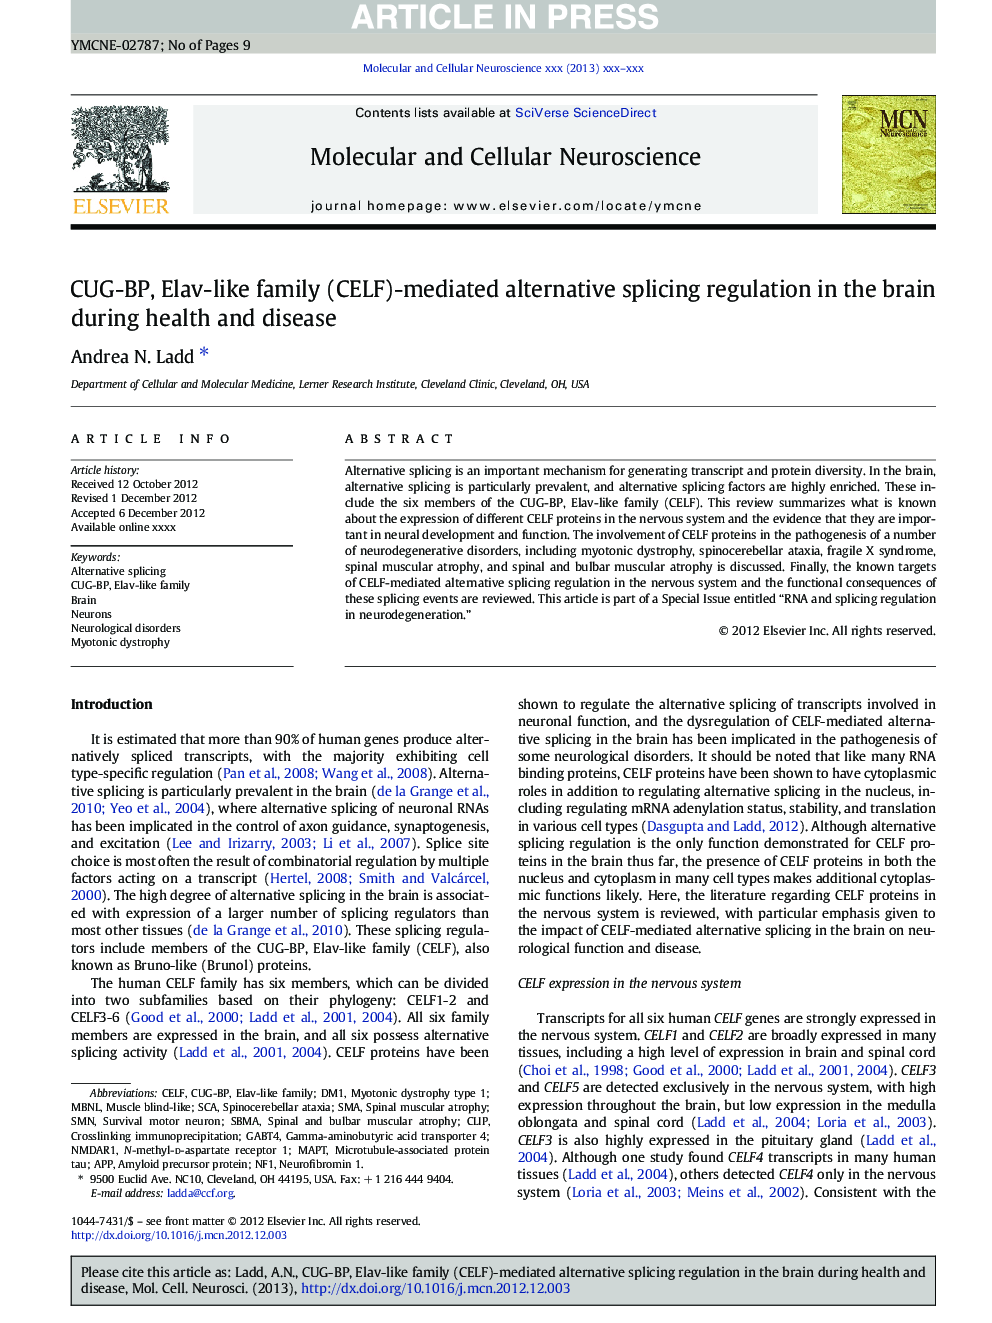 CUG-BP, Elav-like family (CELF)-mediated alternative splicing regulation in the brain during health and disease